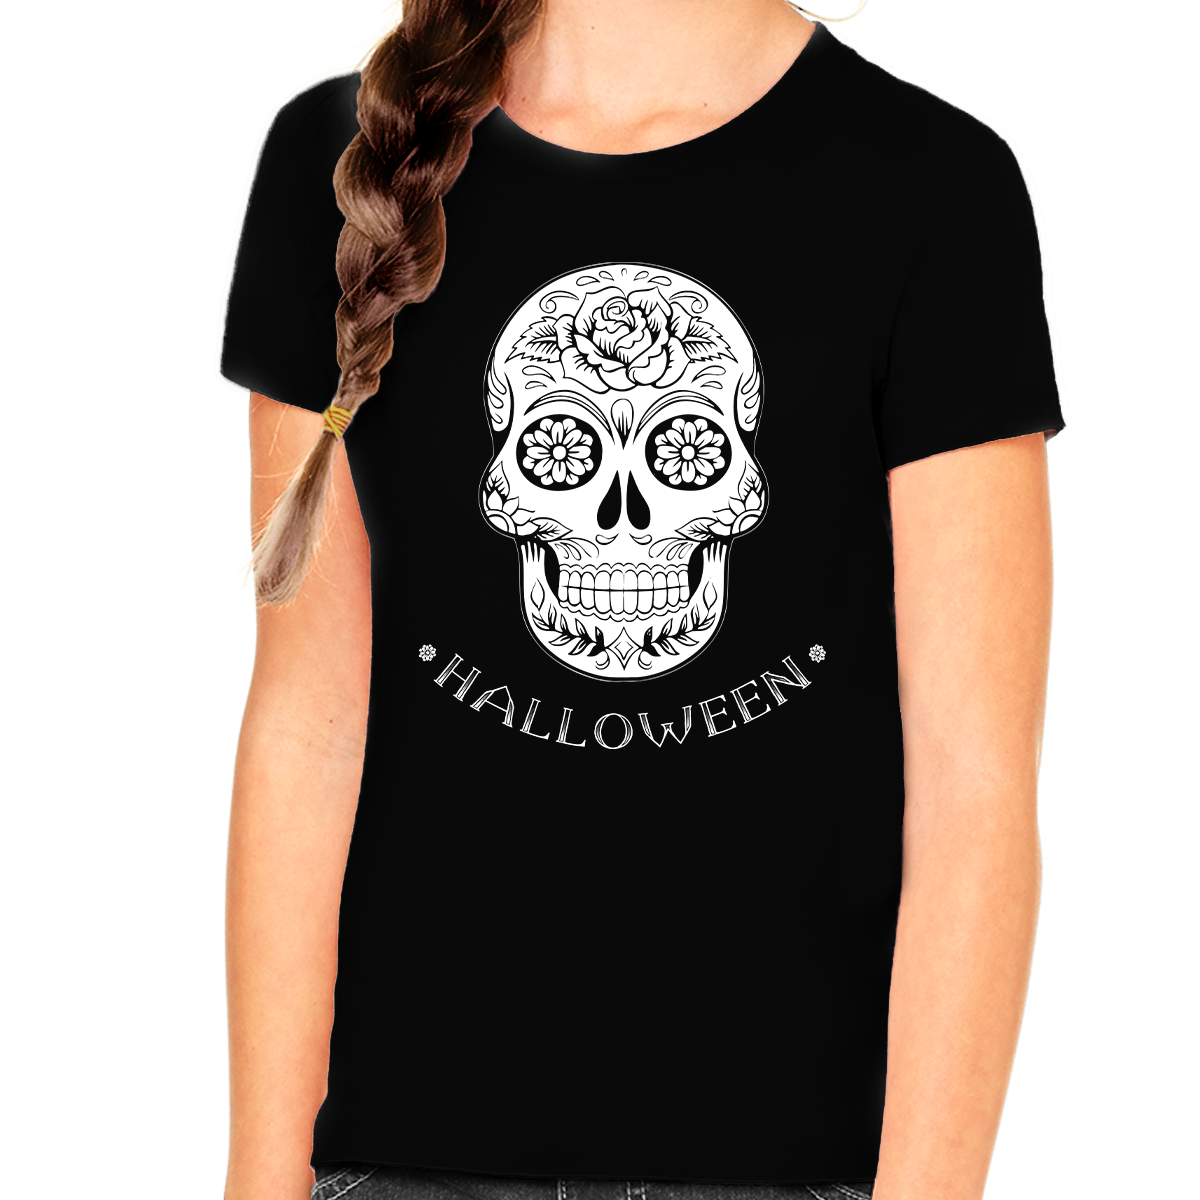 Cool Skeleton Shirt Halloween Shirts for Girls Funny Halloween Shirts for Kids Funny Halloween Shirt